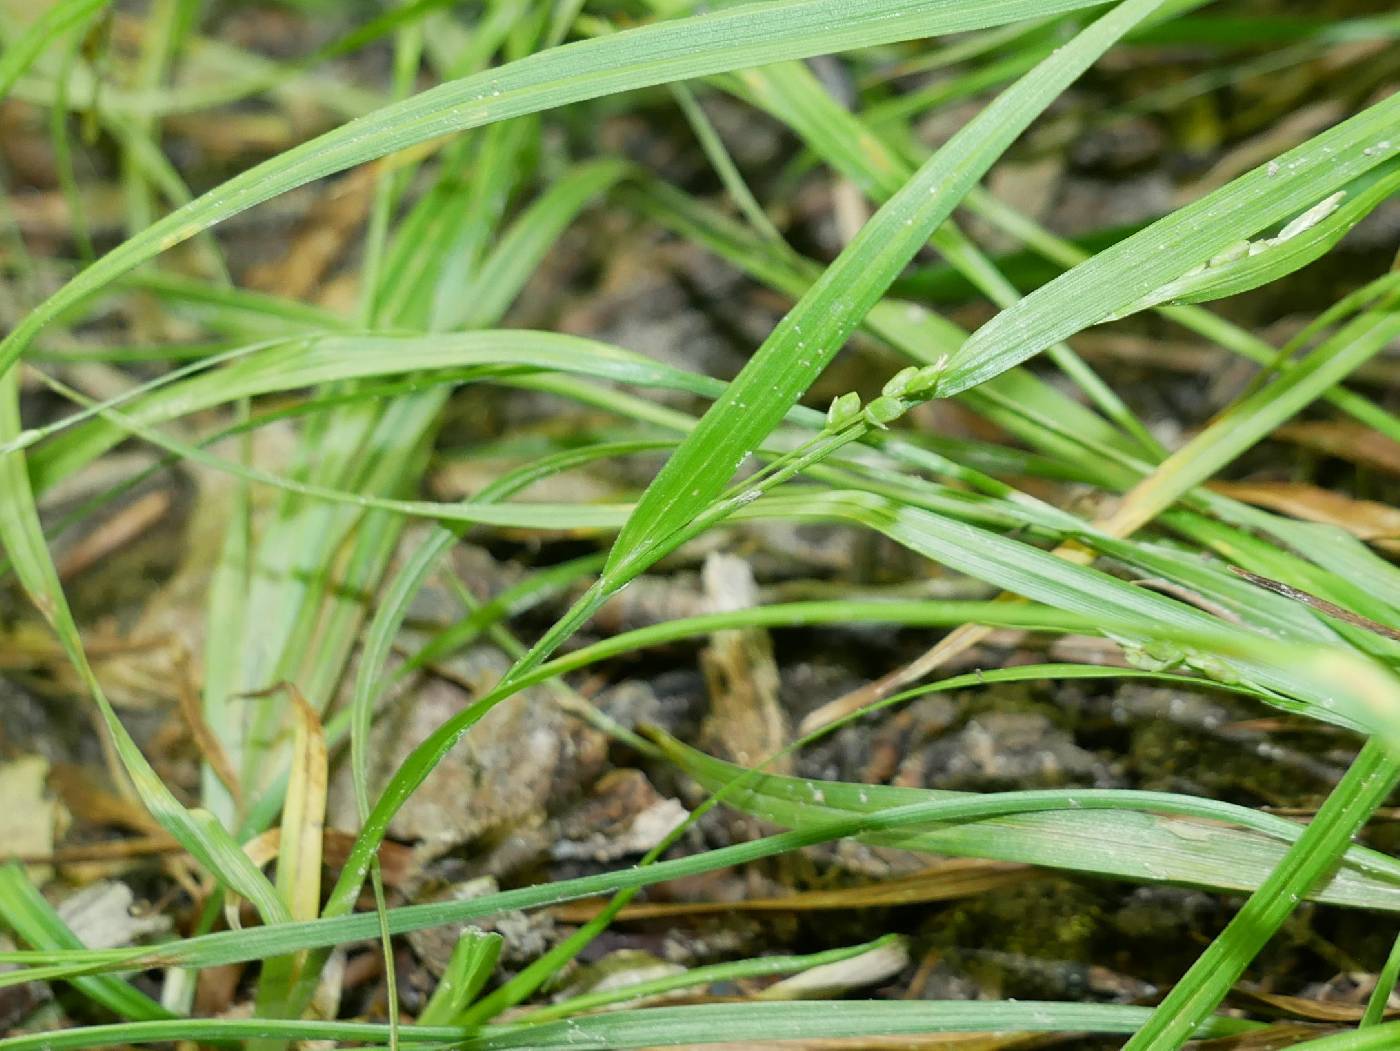 Carex laxiculmis var. copulata image